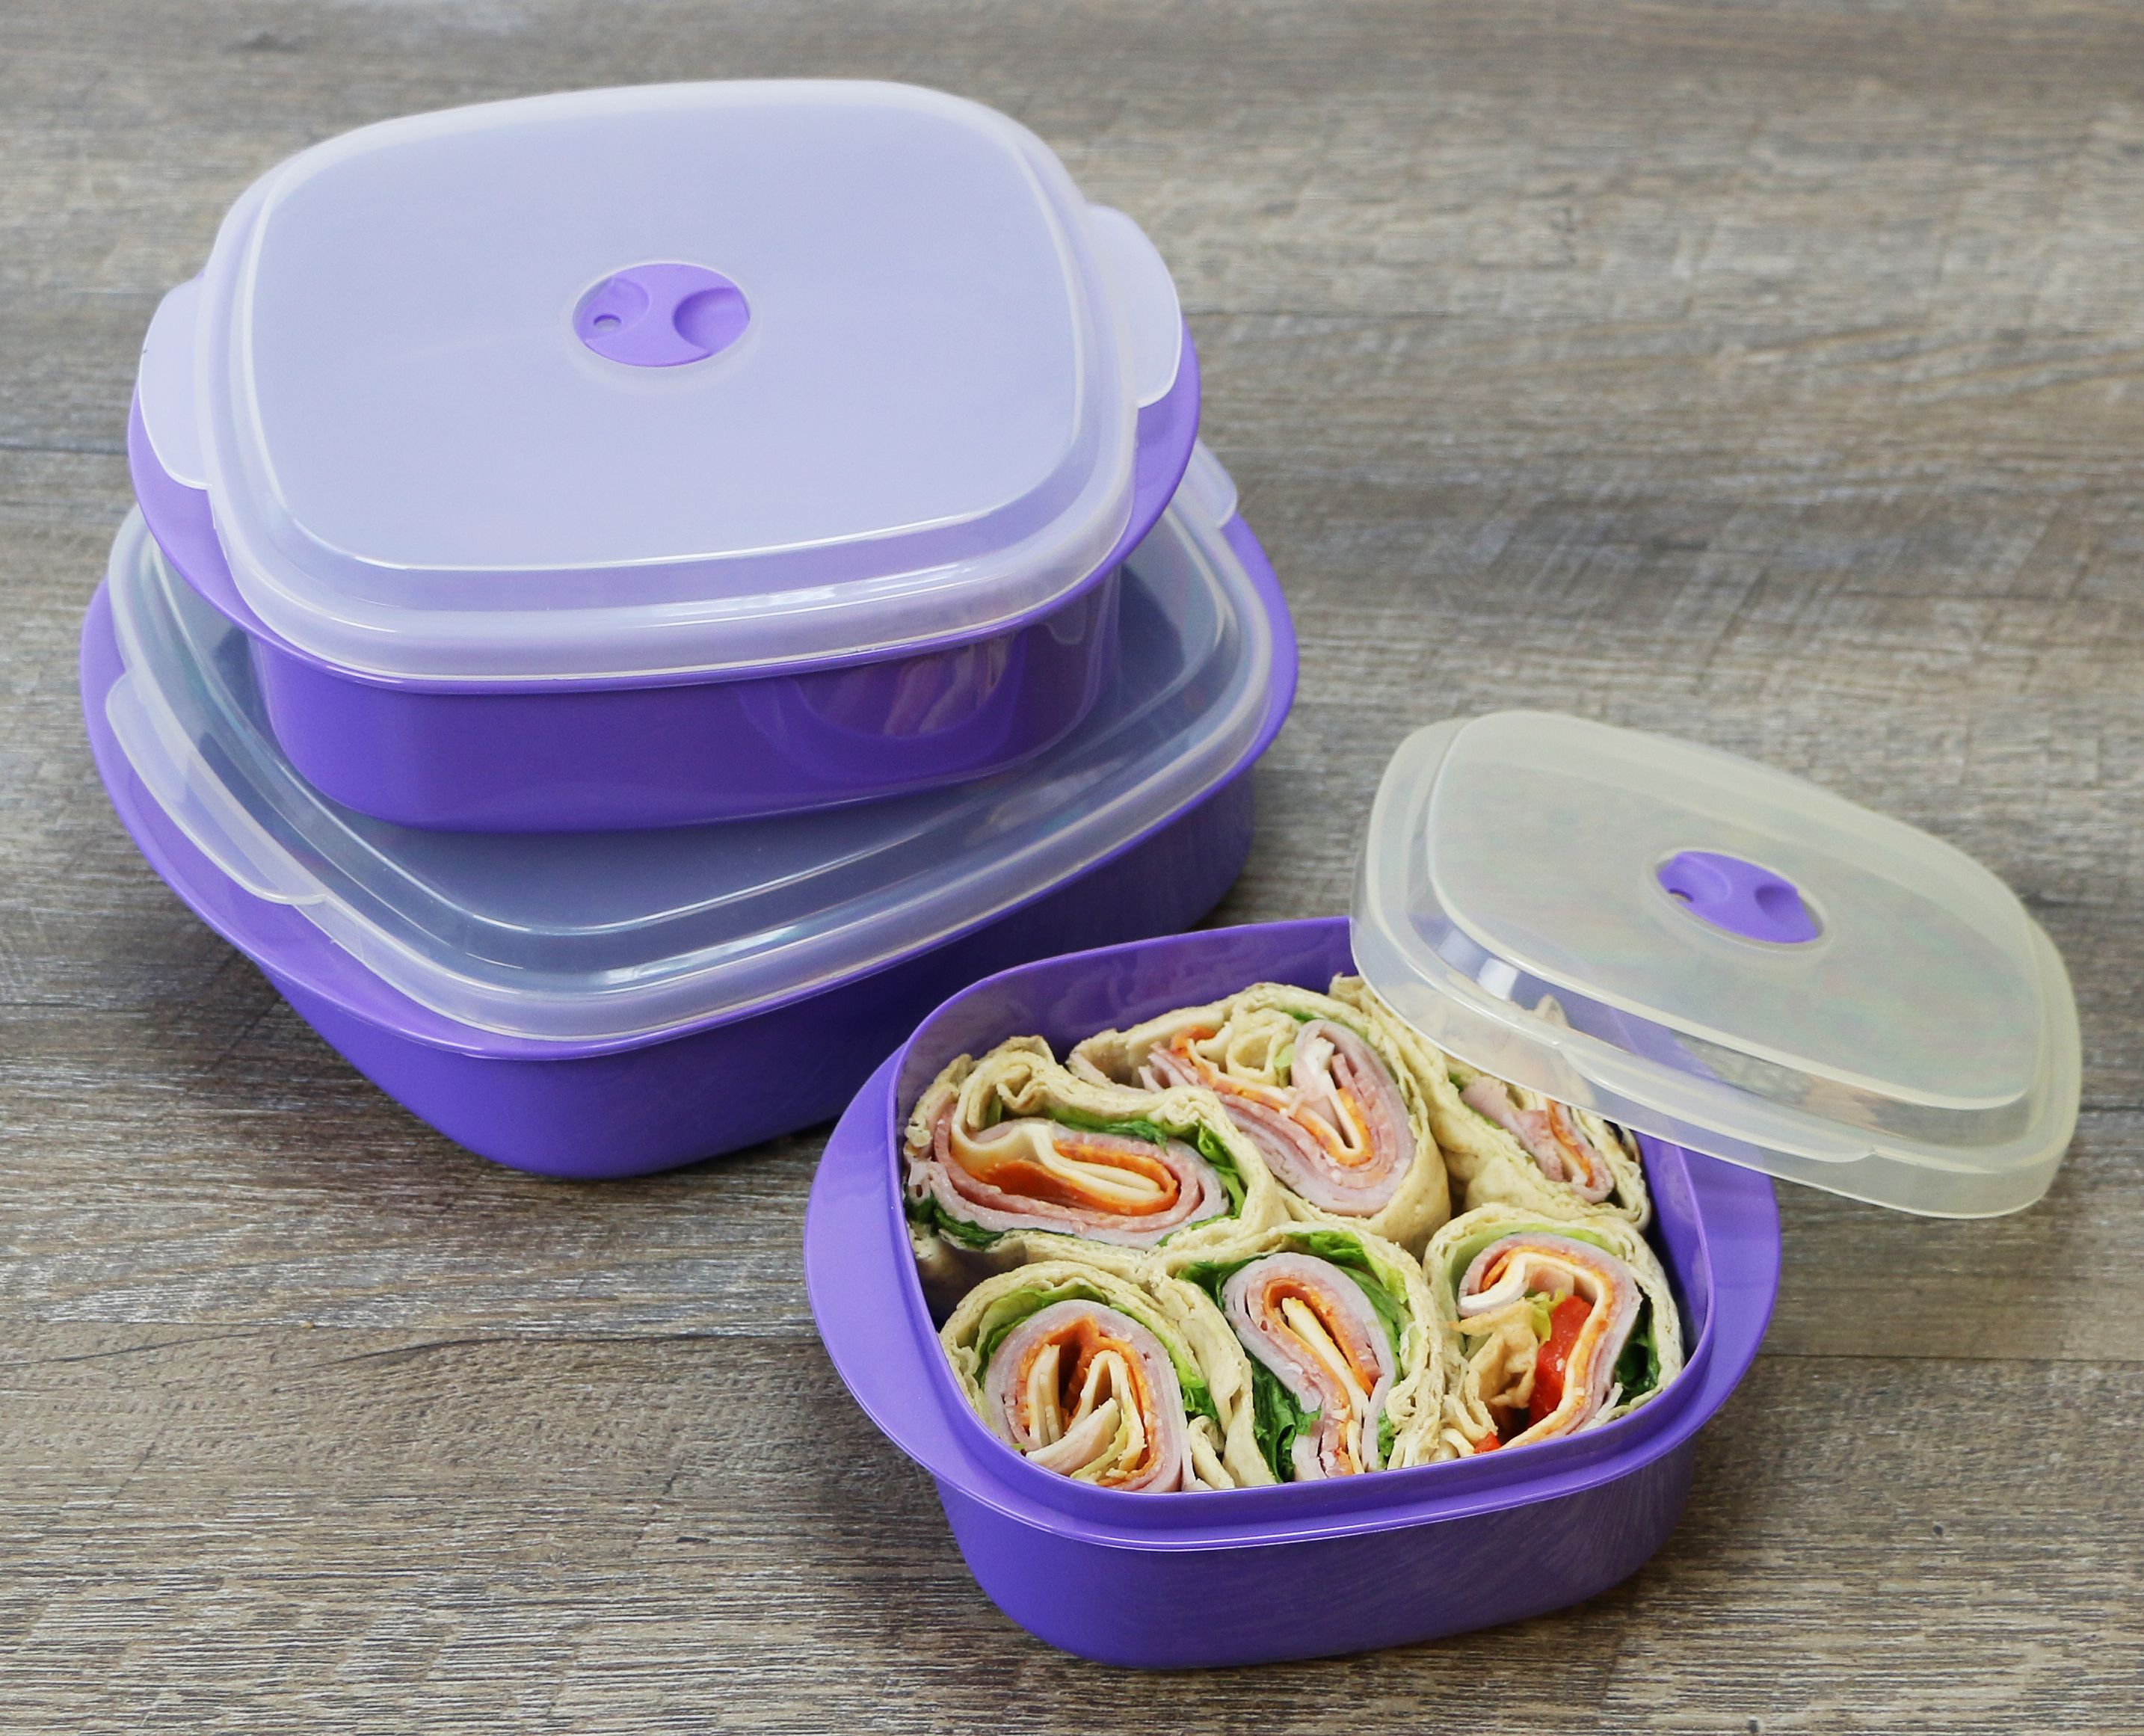 Calypso Basics, Microwave Cookware/ Storage Set, Purple - image 2 of 4